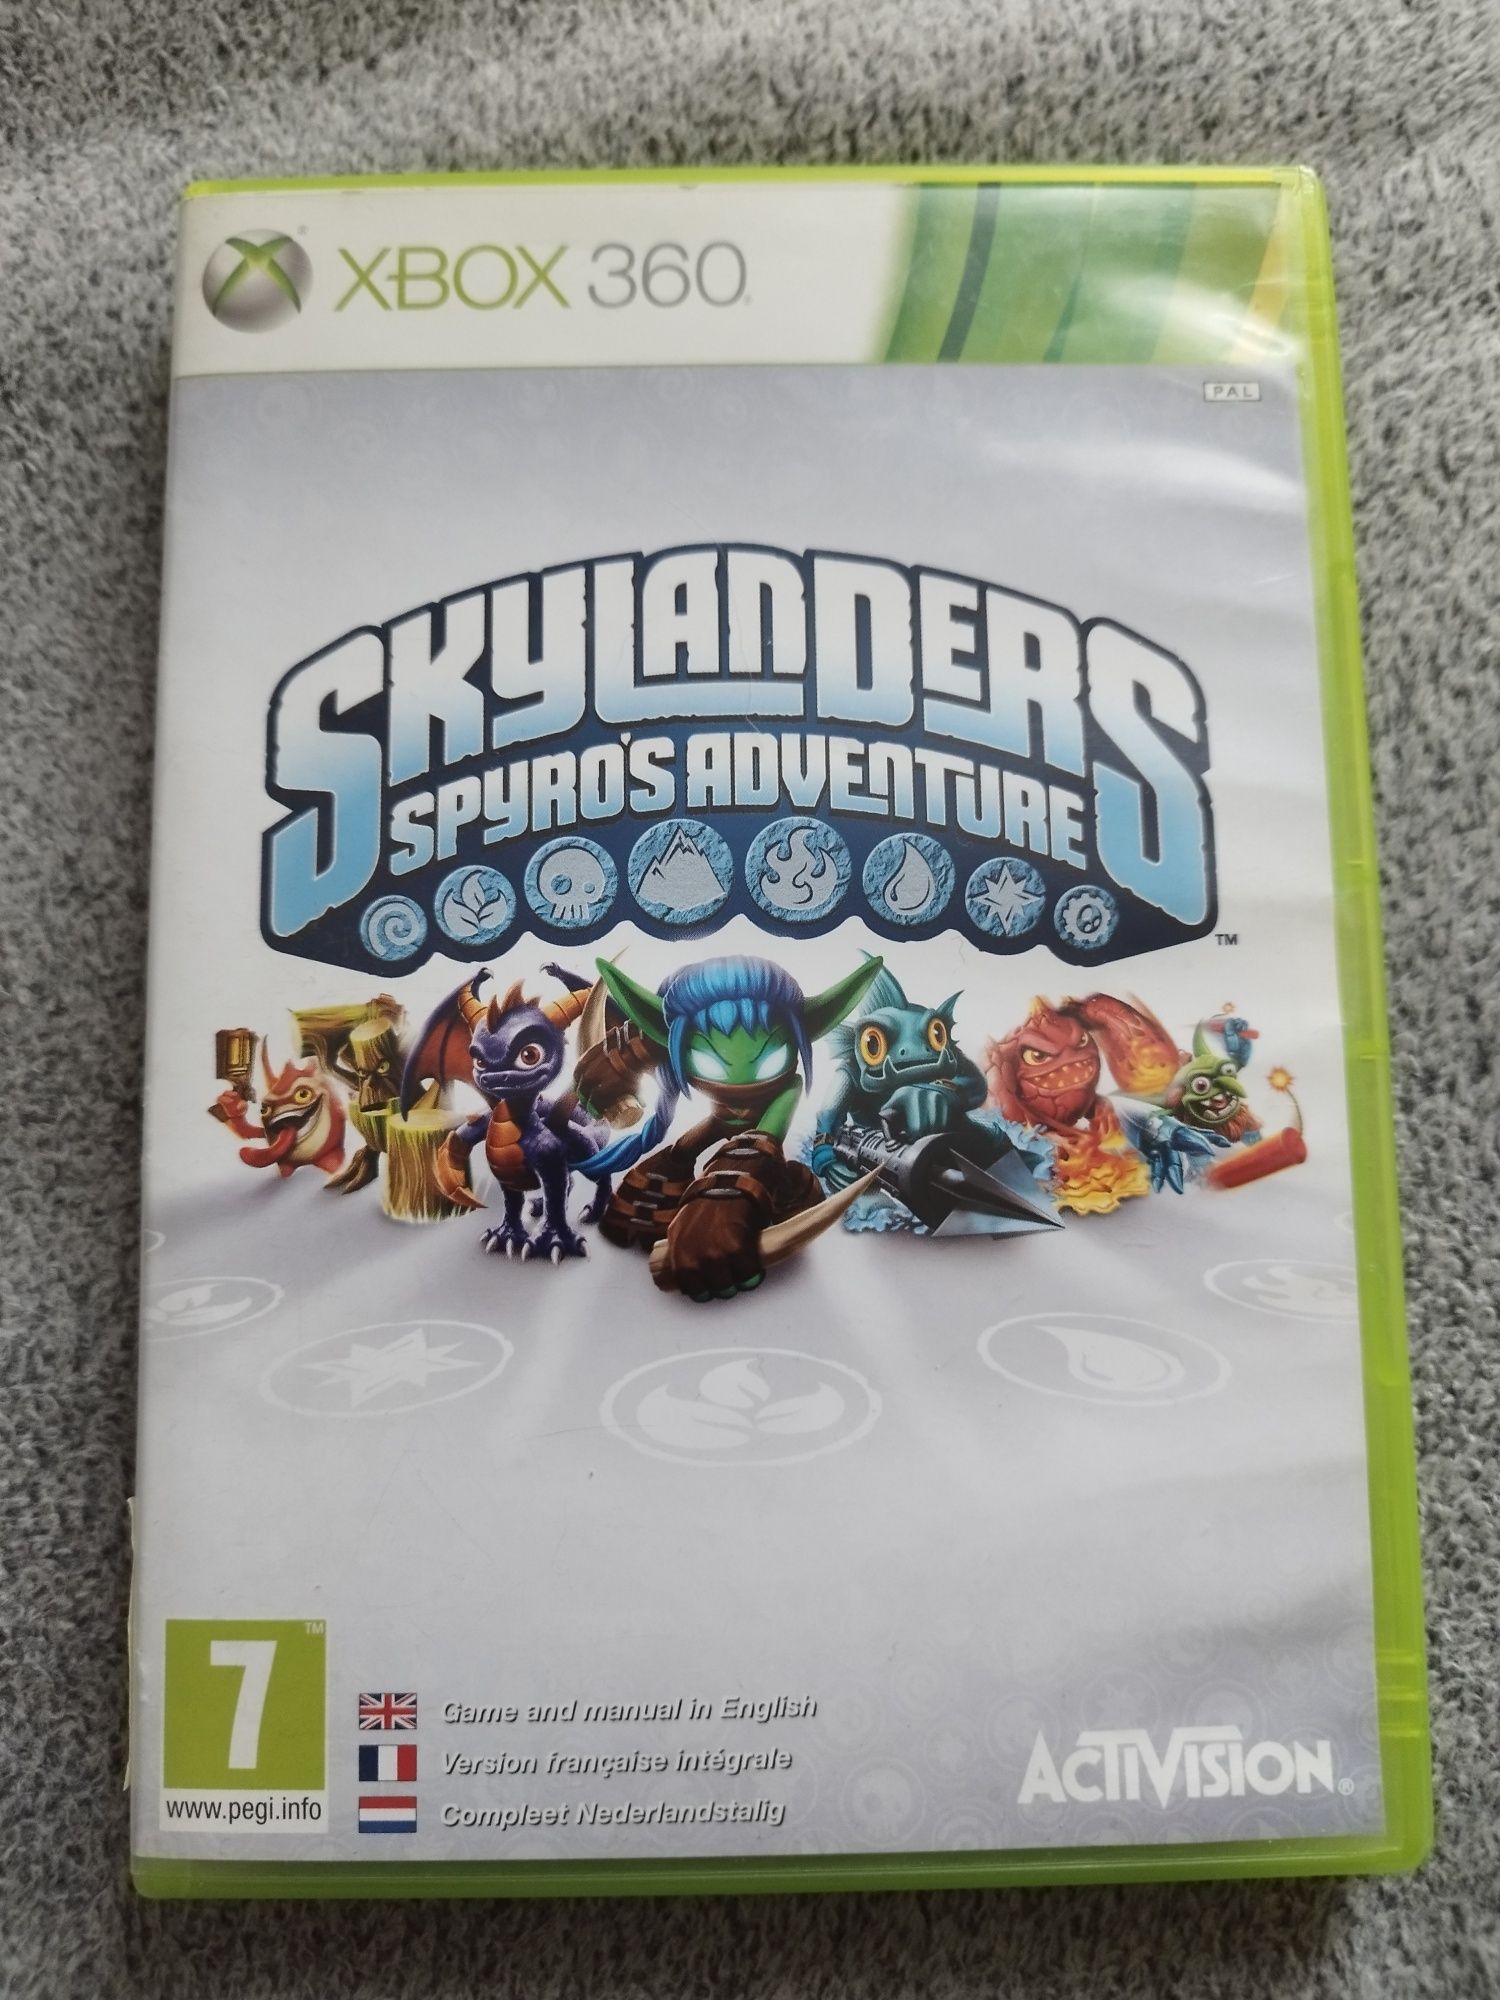 Plytka do gry Sylanders Spyros Adventure xbox360. Xbox 360